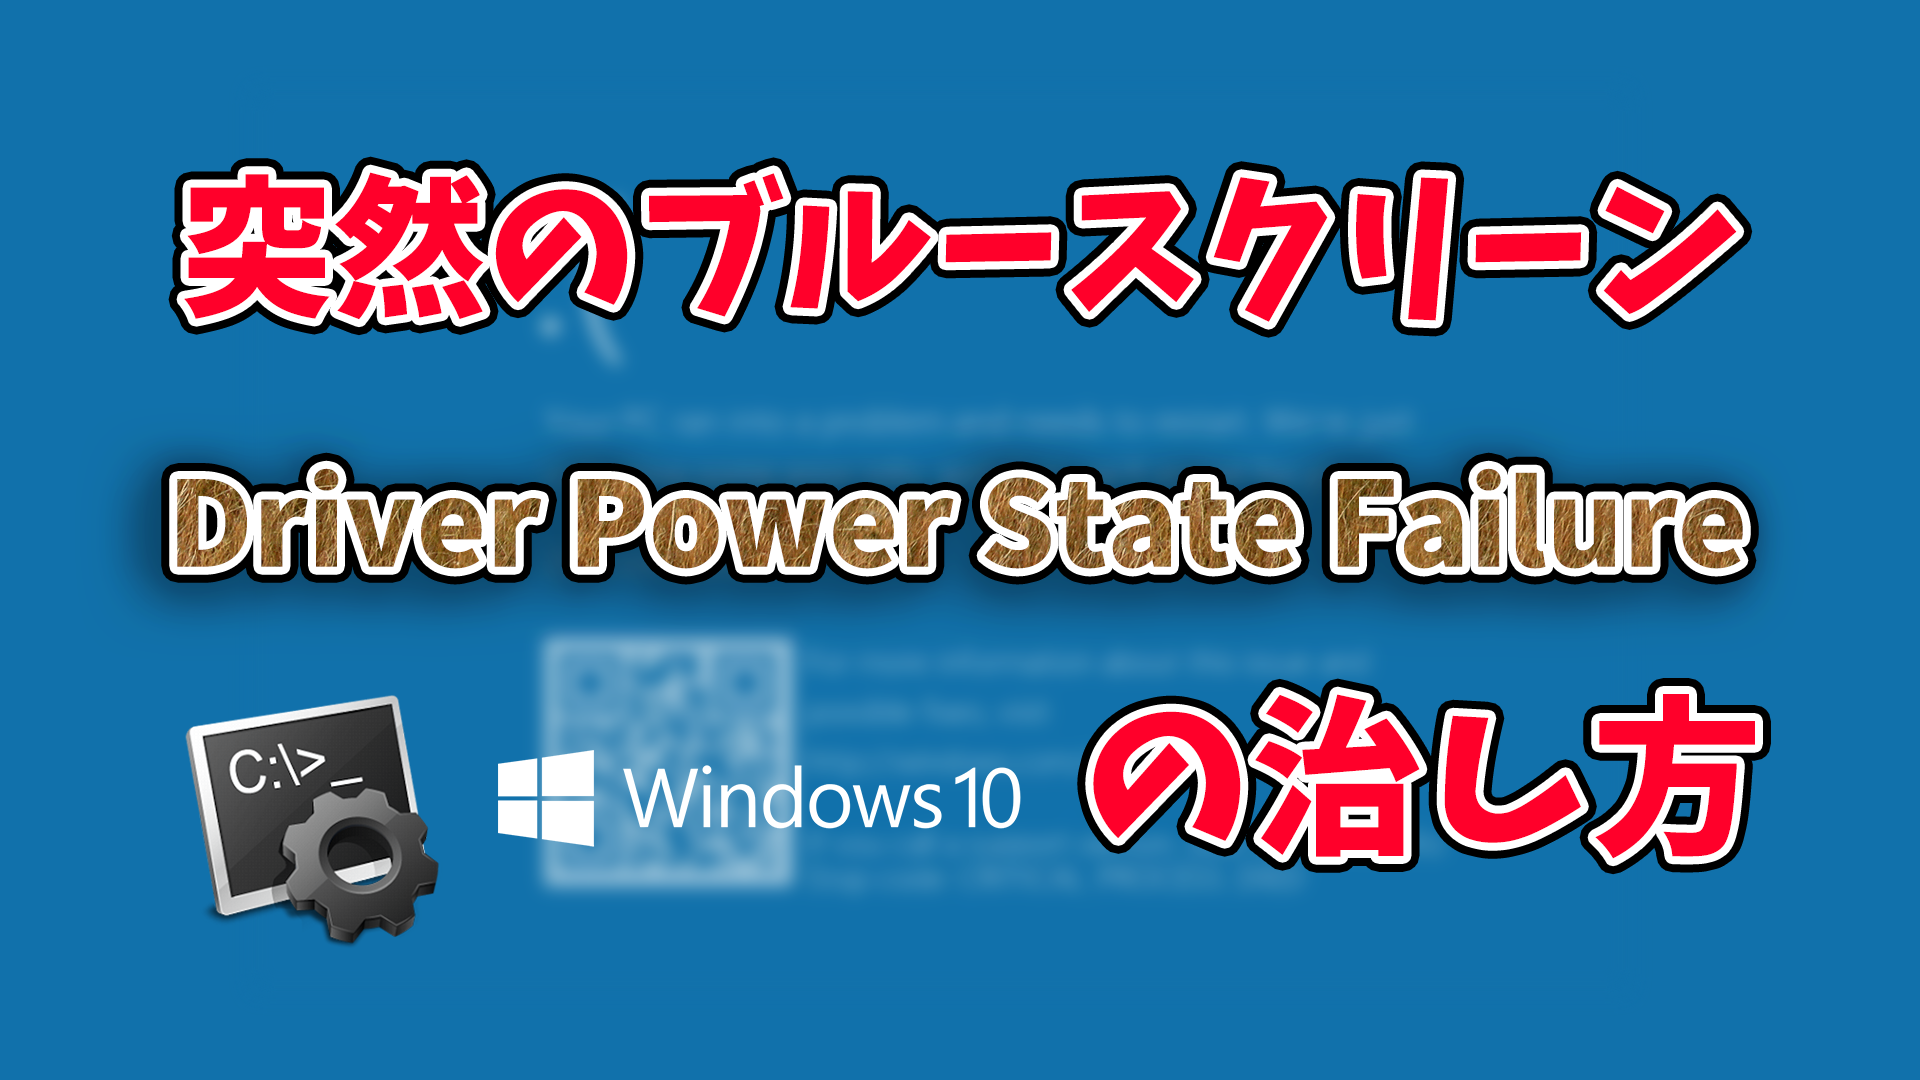 7c4e866123723e03ef075d660bf377c4 - ブルースクリーン『Driver Power State Failure』の治し方(Windows)